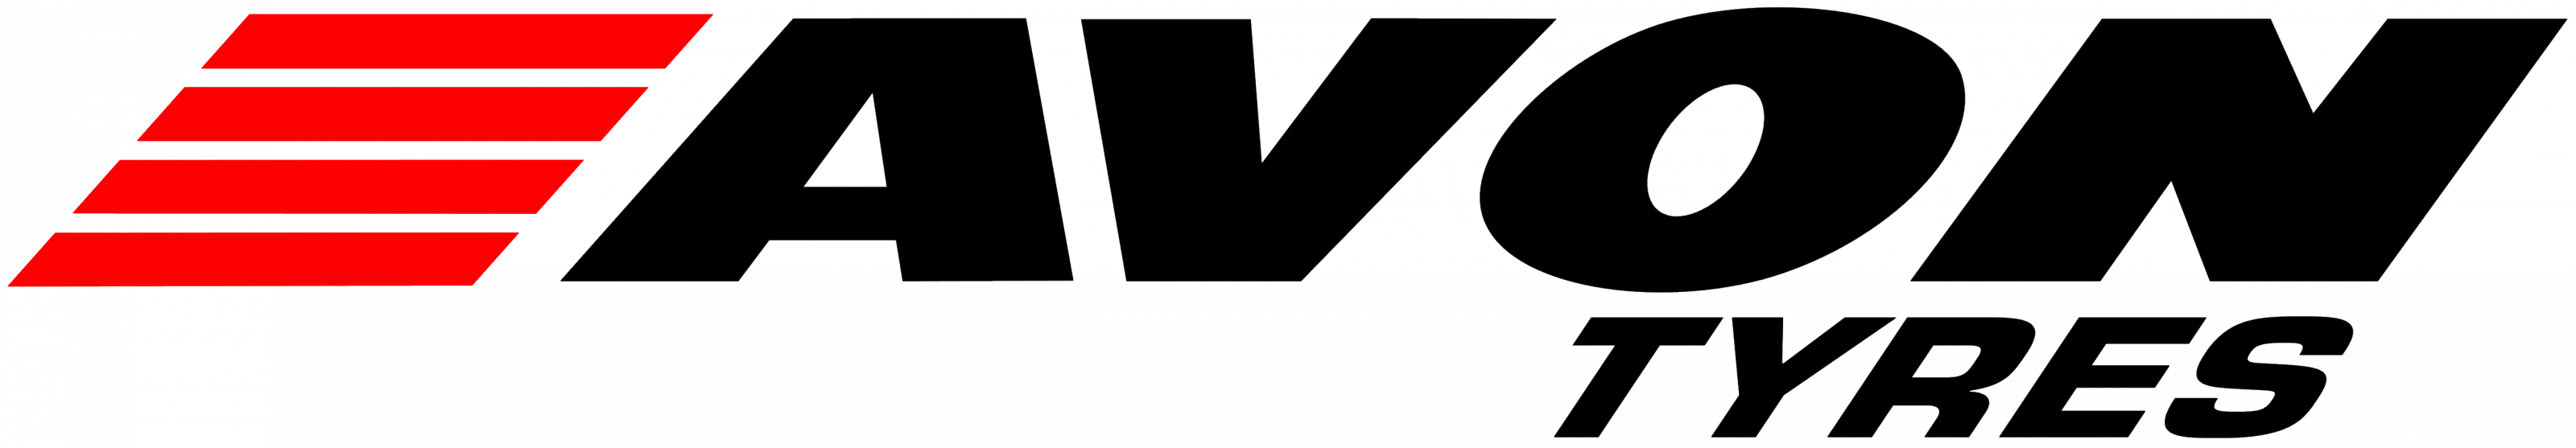 Производитель AVON логотип